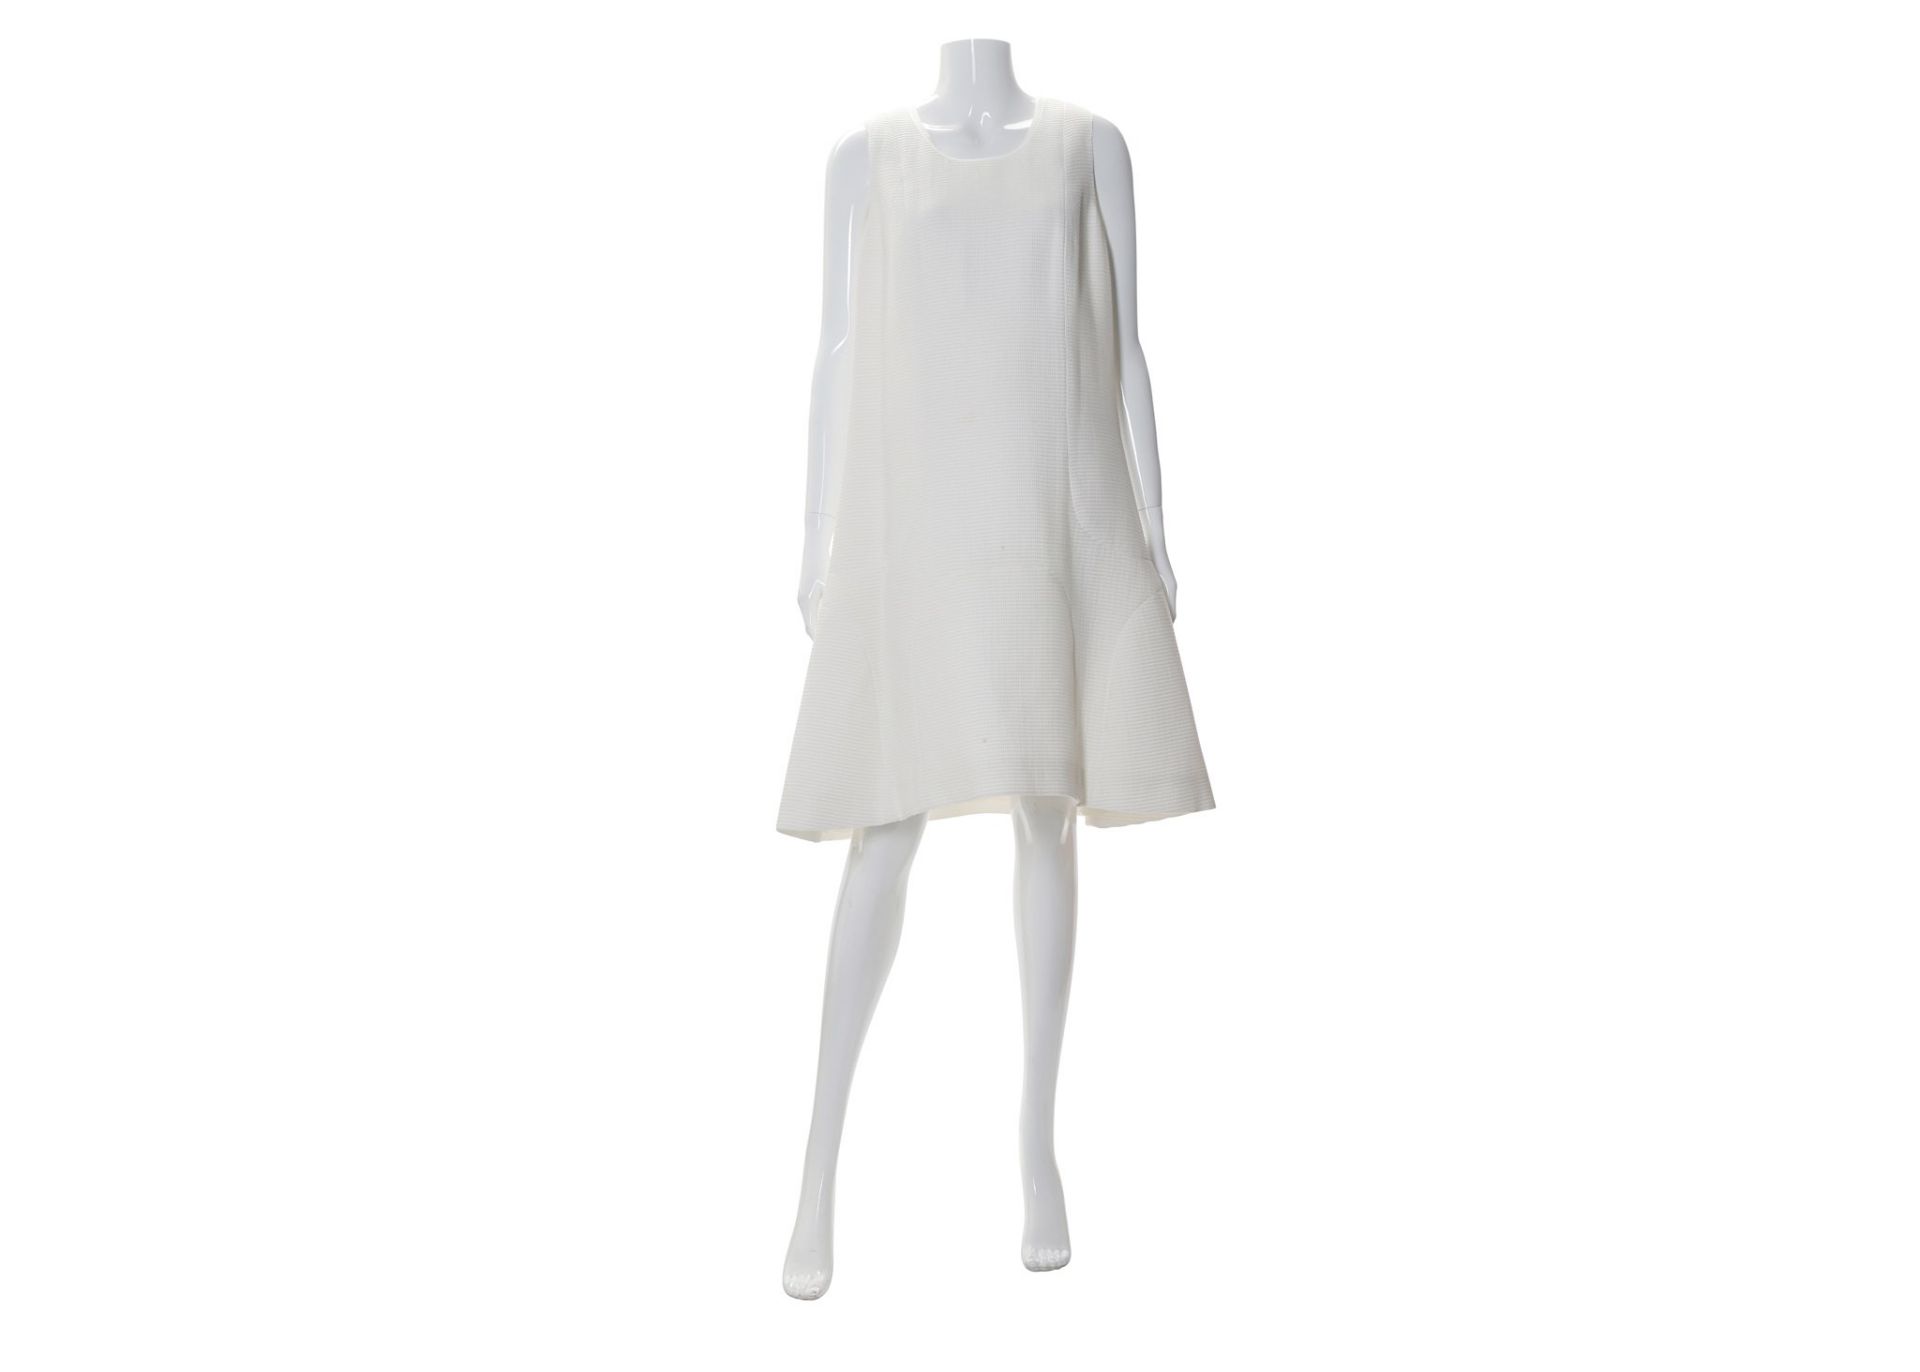 Chanel White Waffle Cotton Dress, 2010s, 60s inspi